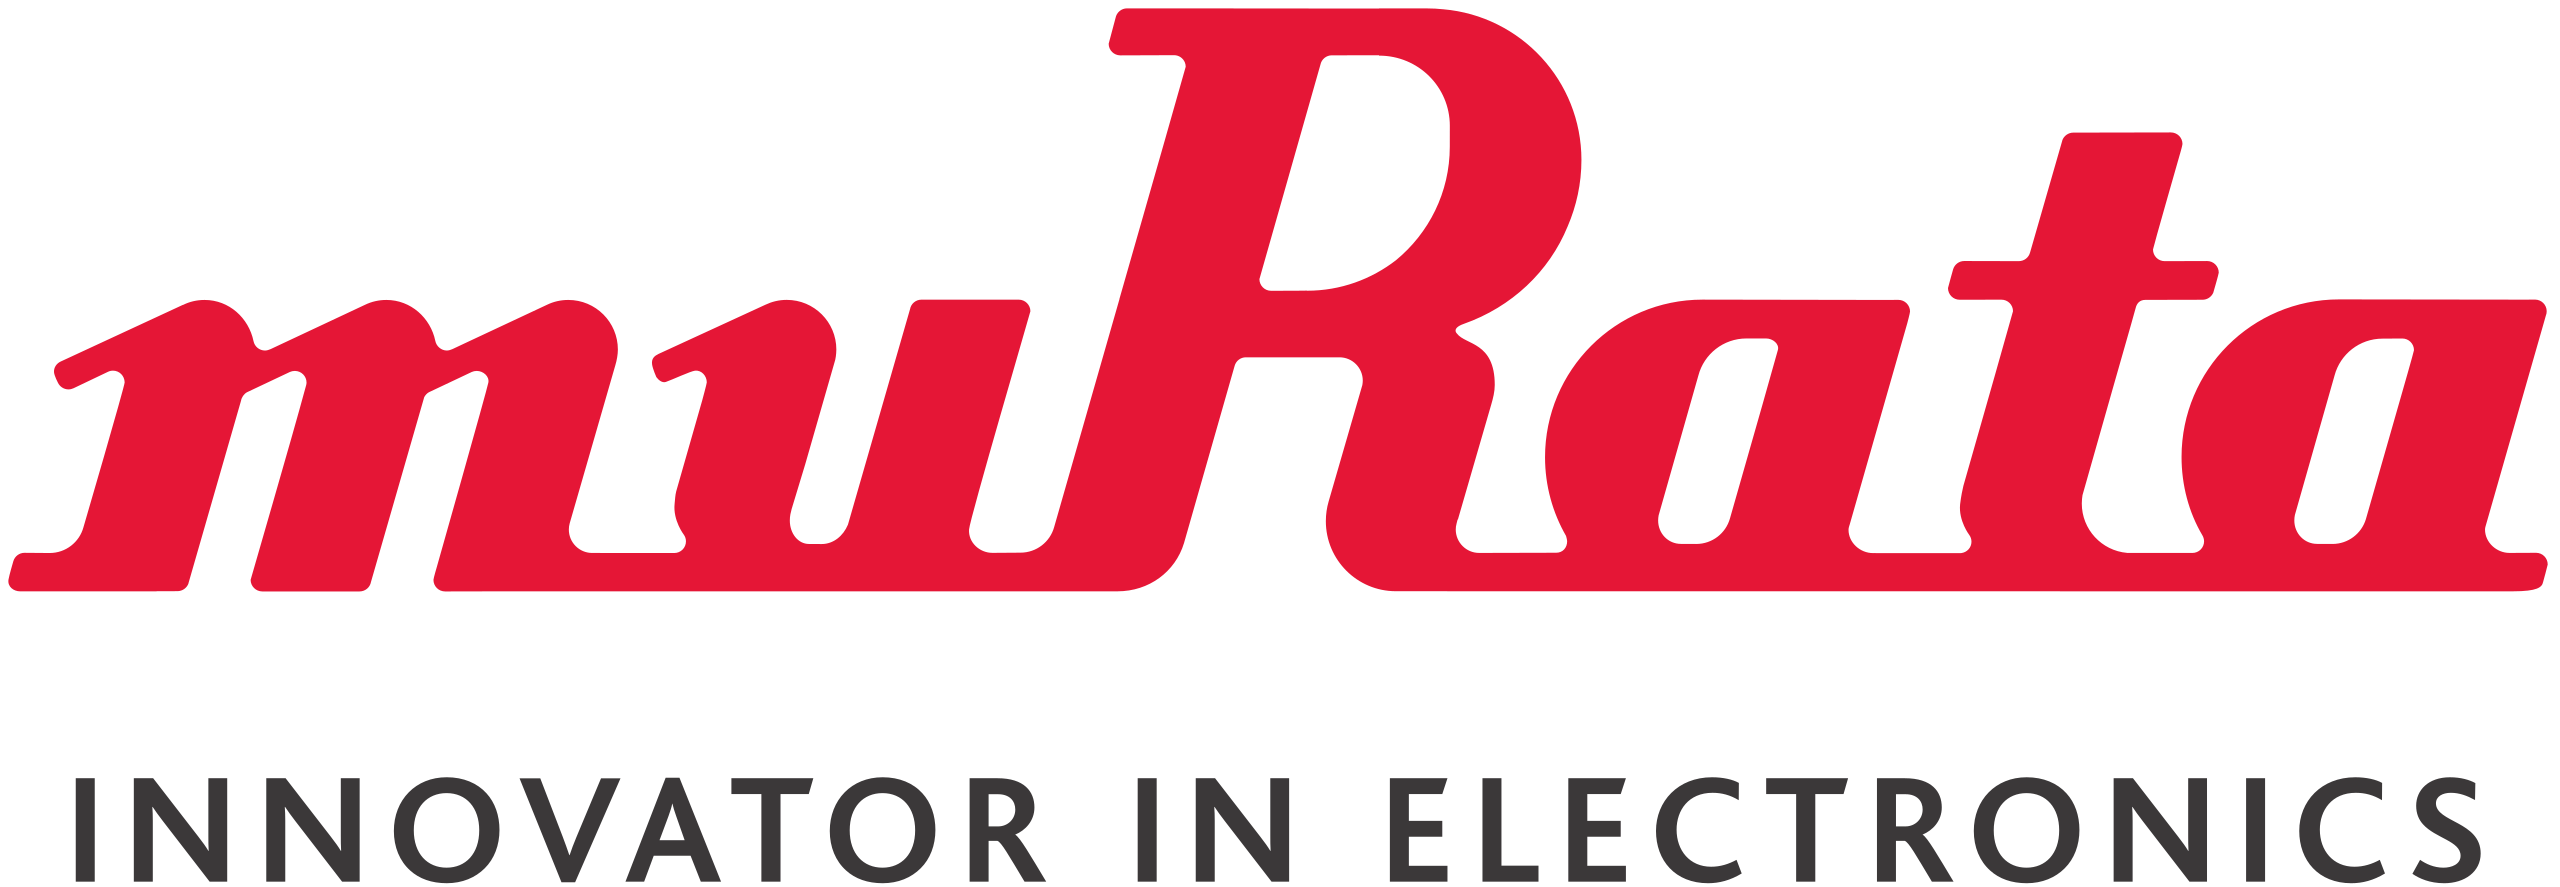 Murata_Manufacturing_logo